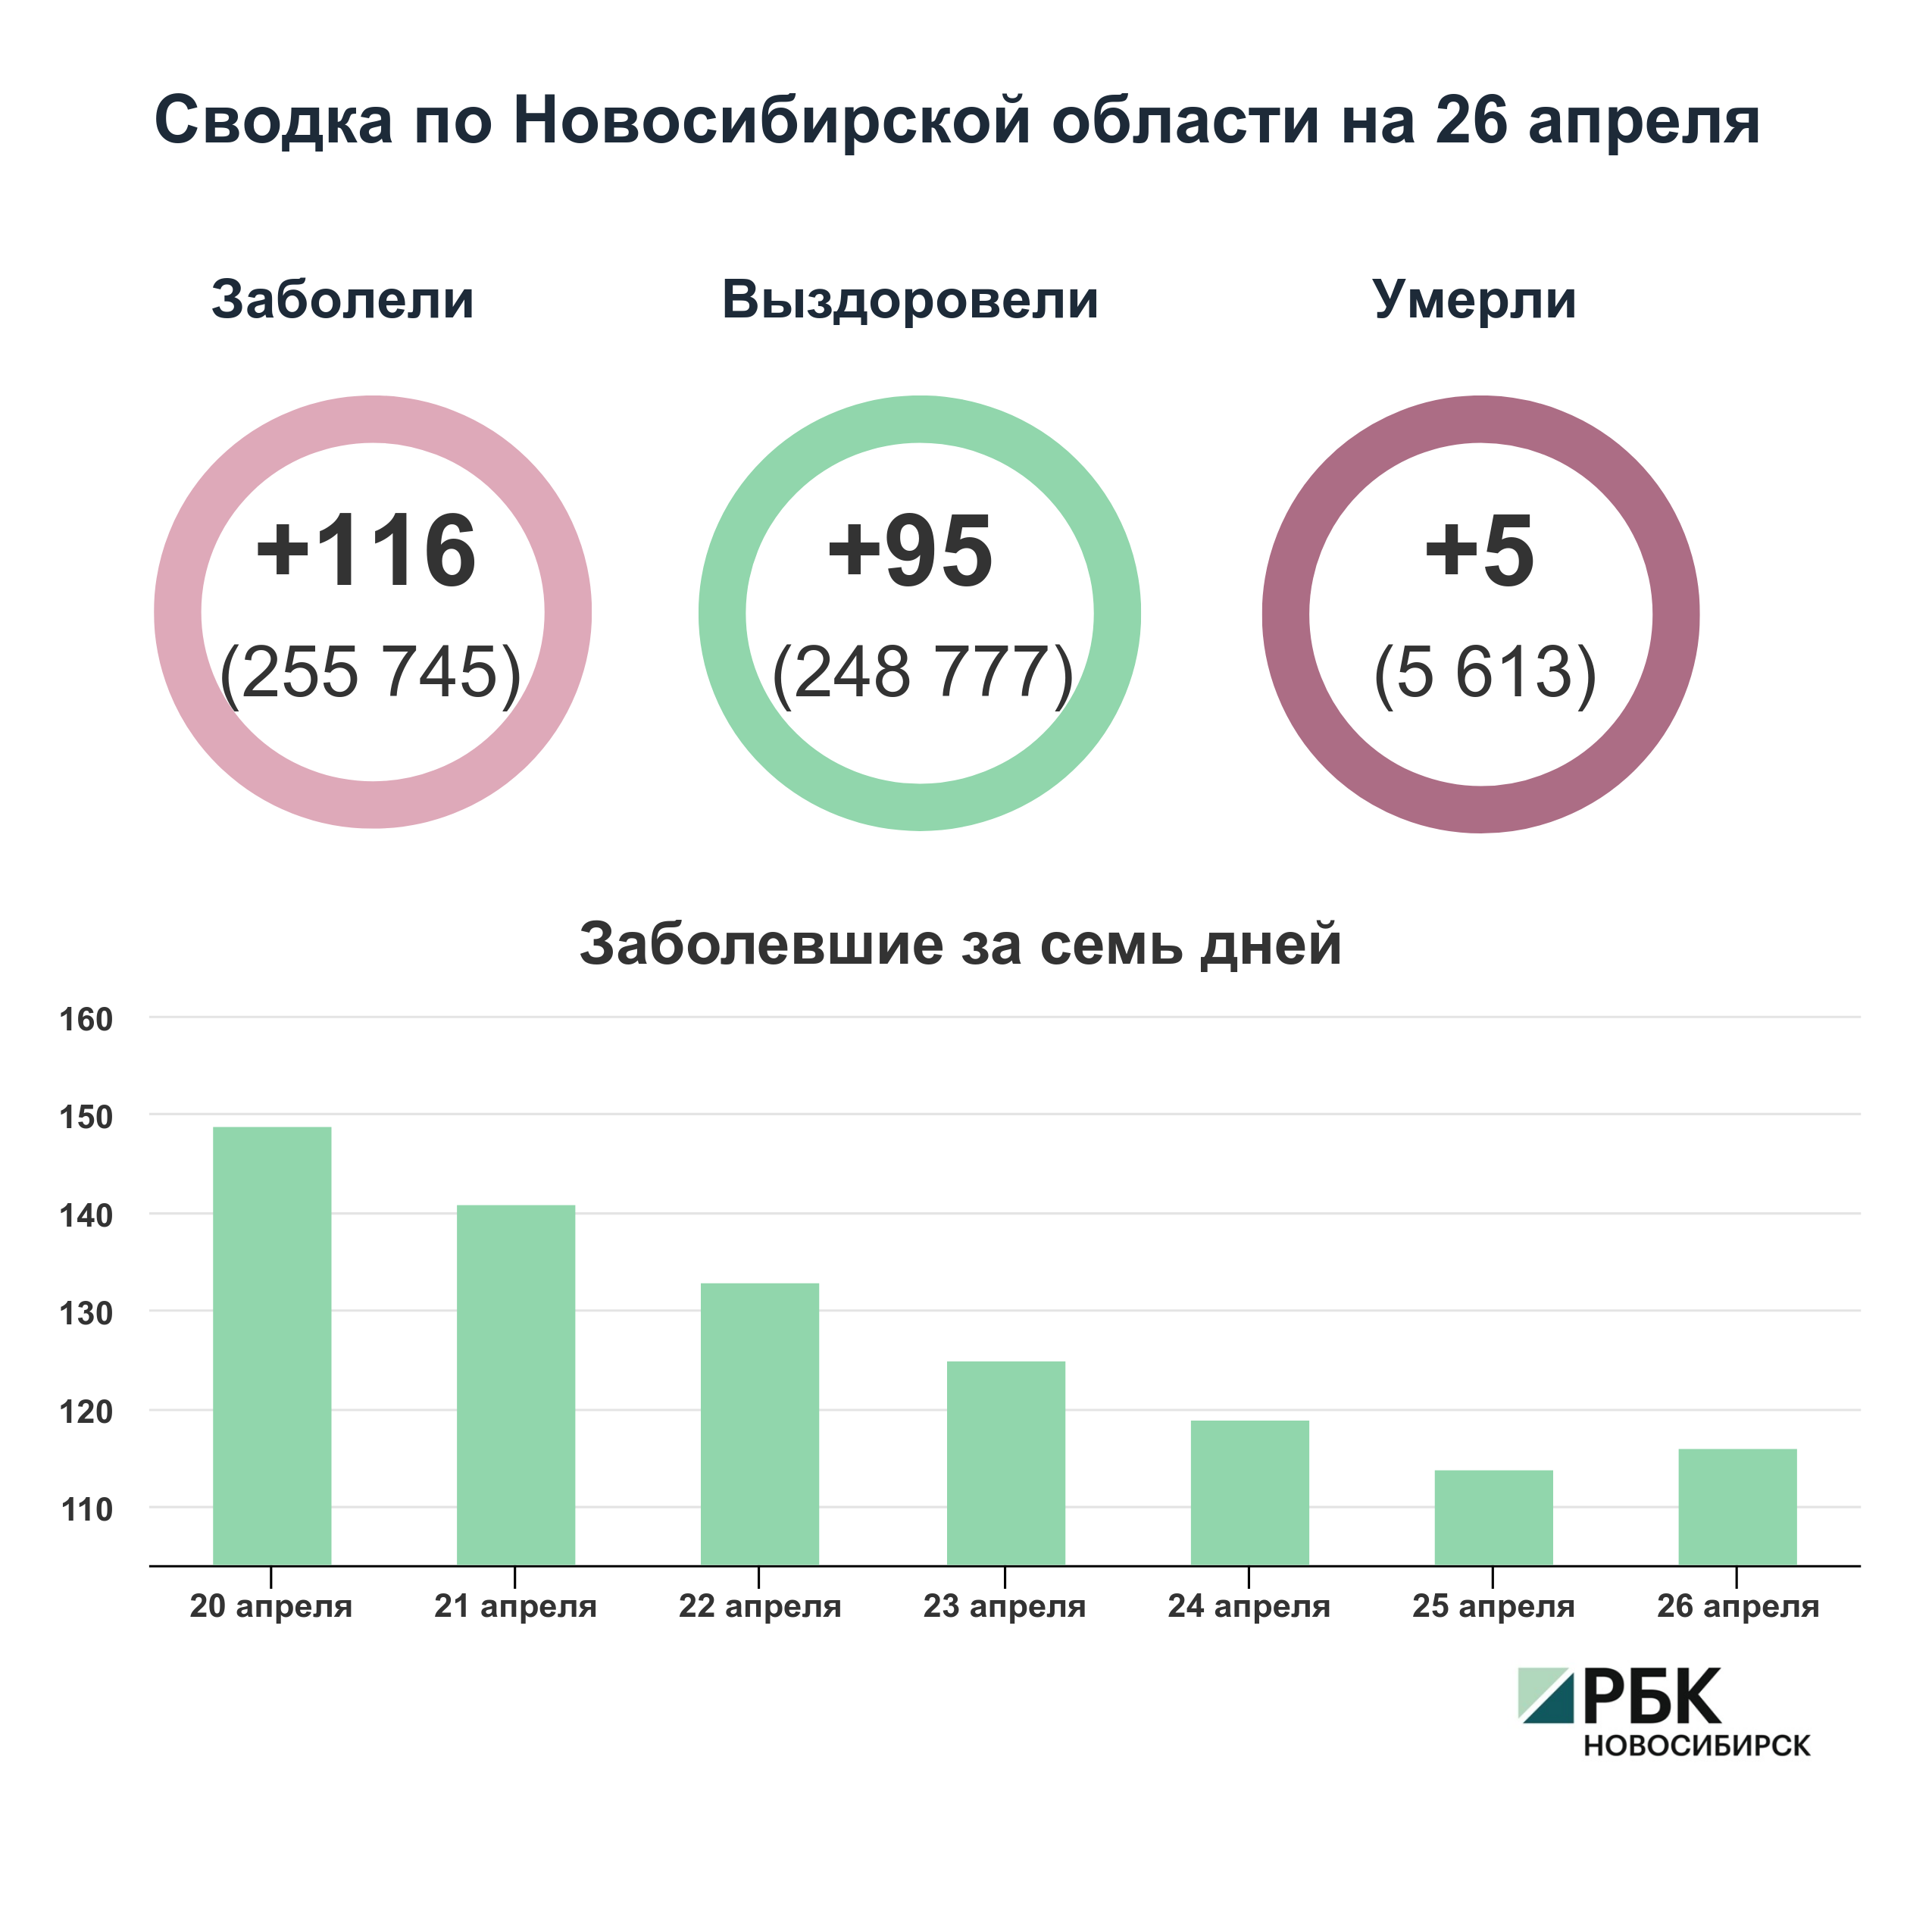 Коронавирус в Новосибирске: сводка на 26 апреля